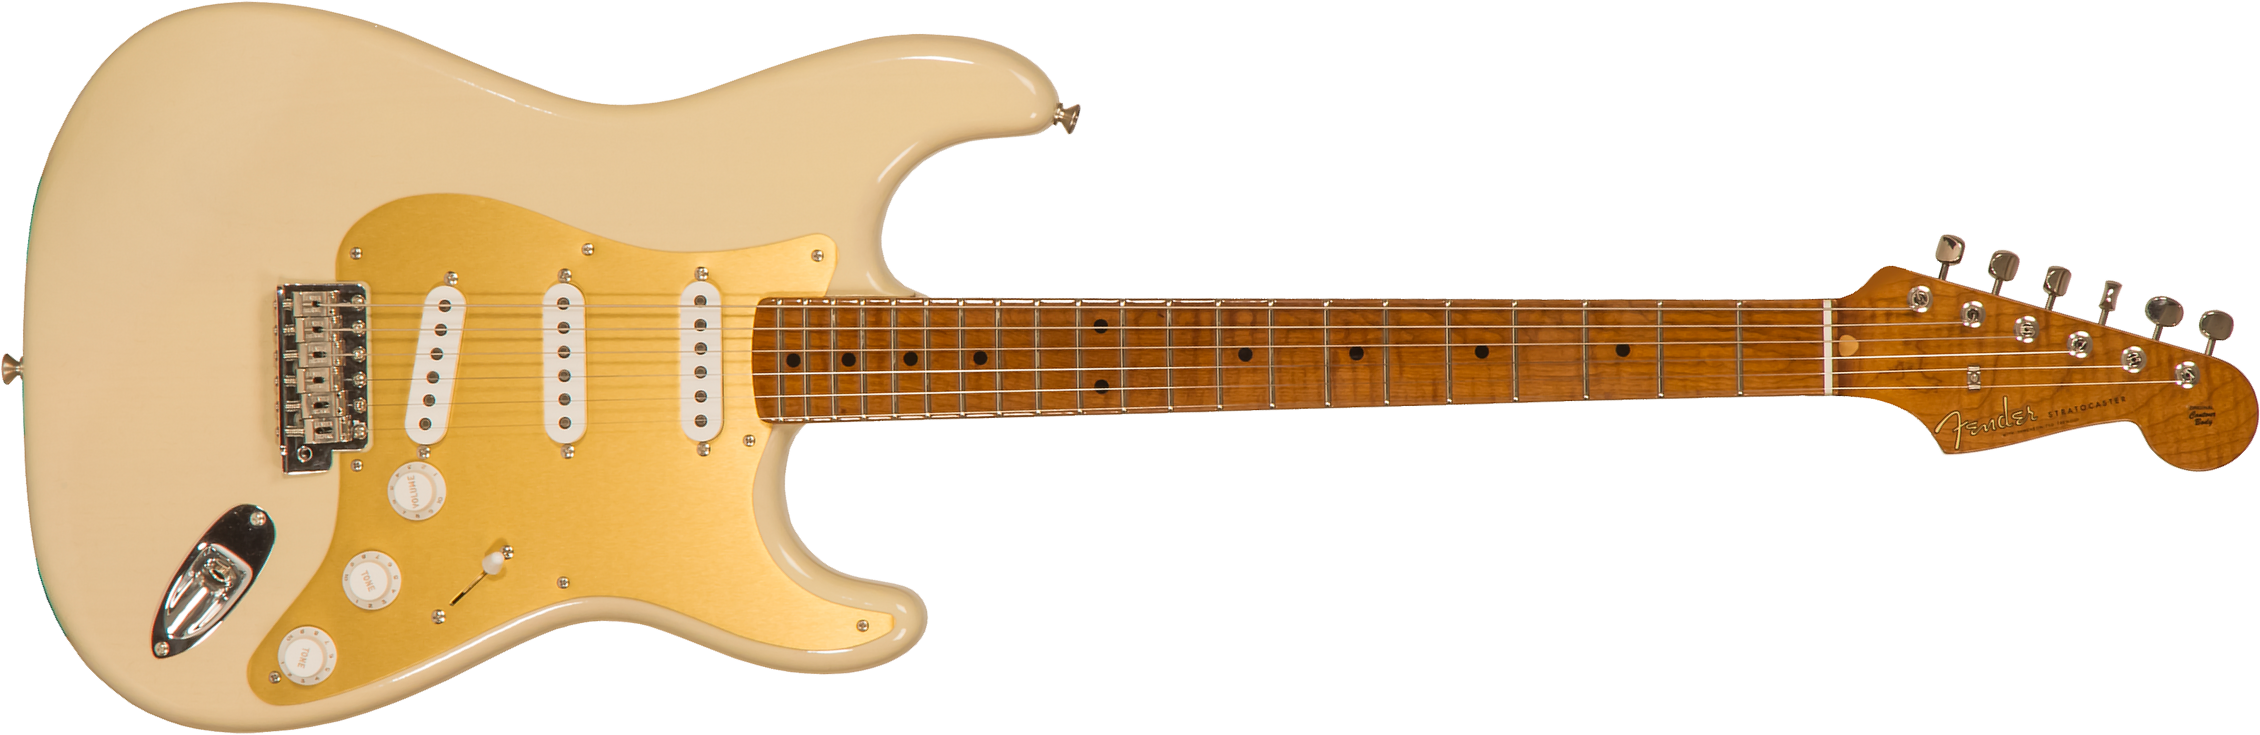 Fender Custom Shop Strat 1957 3s Trem Mn #r116646 - Lush Closet Classic Vintage Blonde - Str shape electric guitar - Main picture